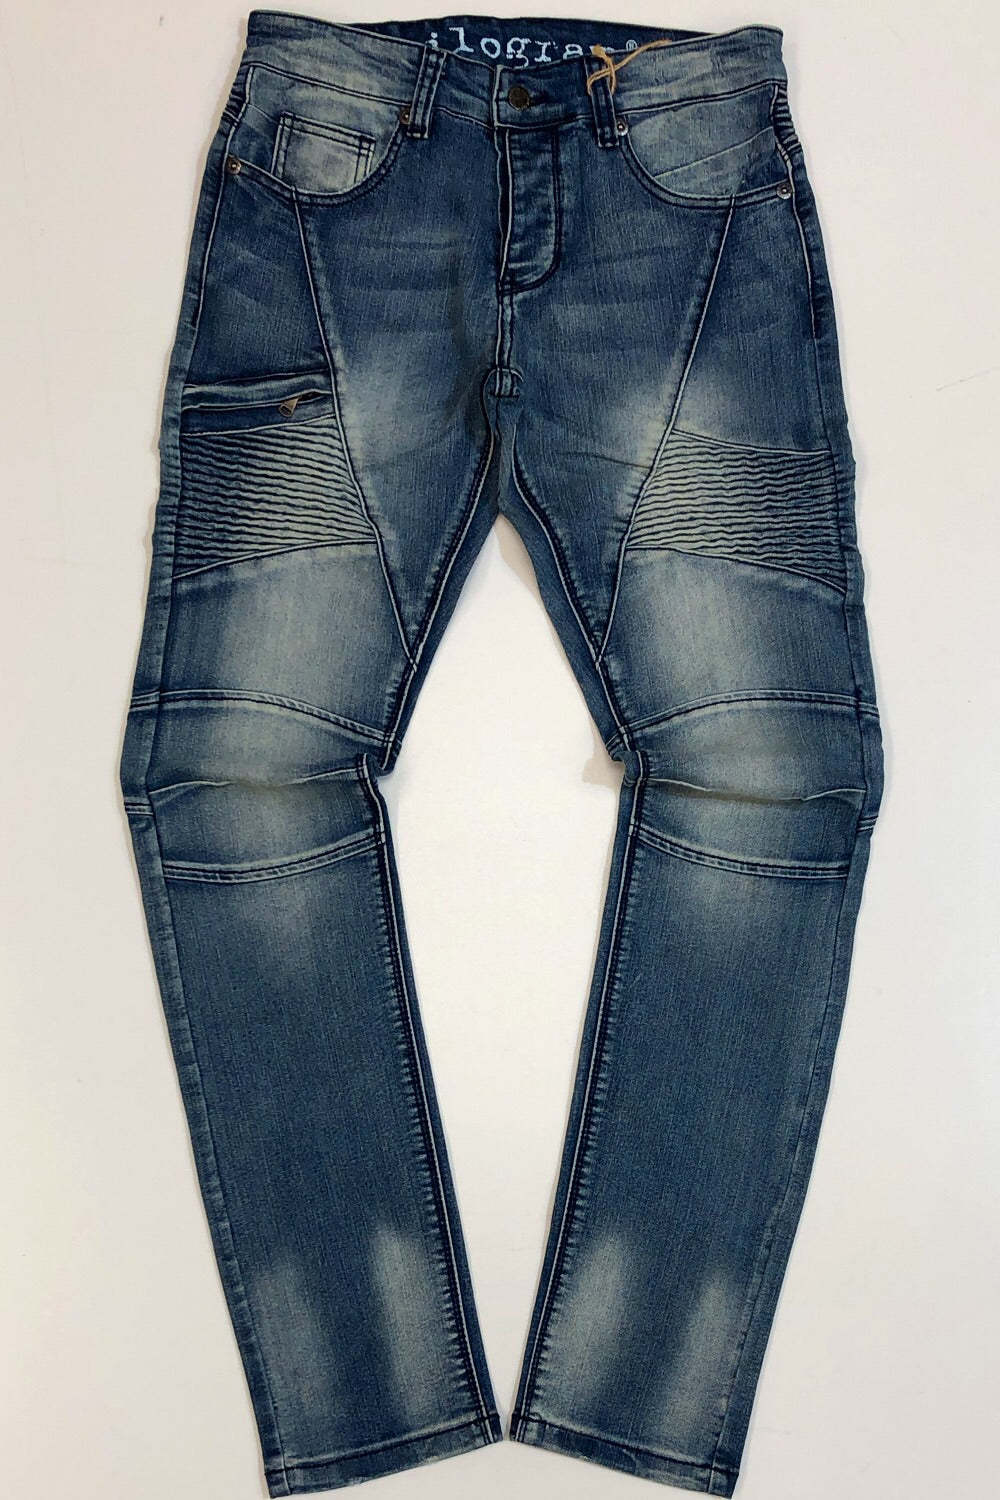 Kilogram- motor thigh jeans